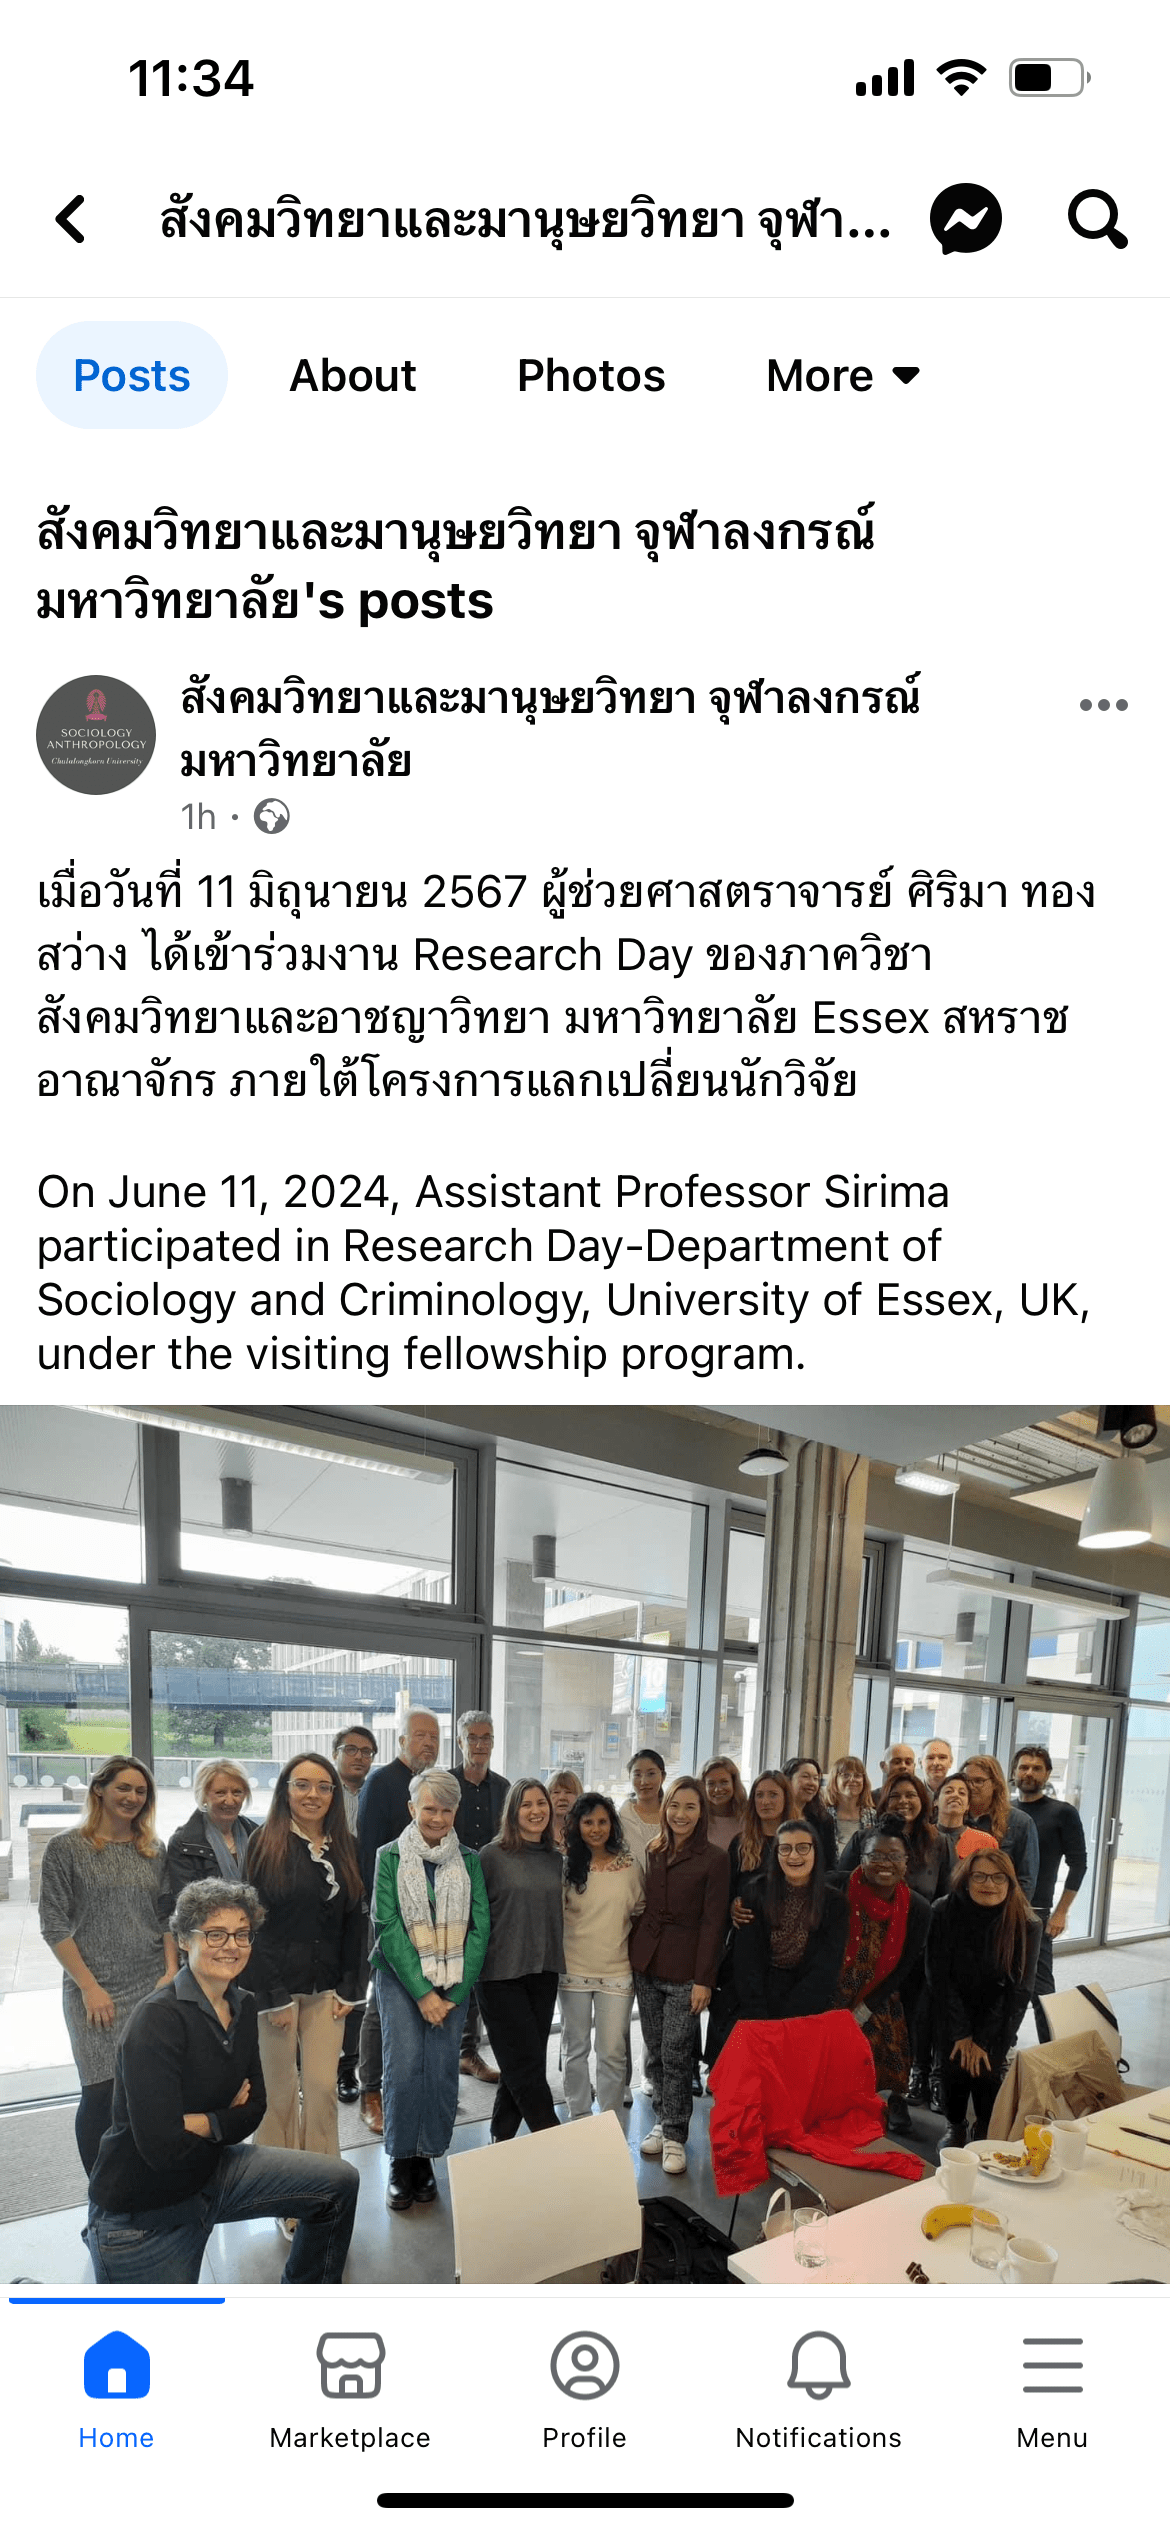 Social Media post from Thai university